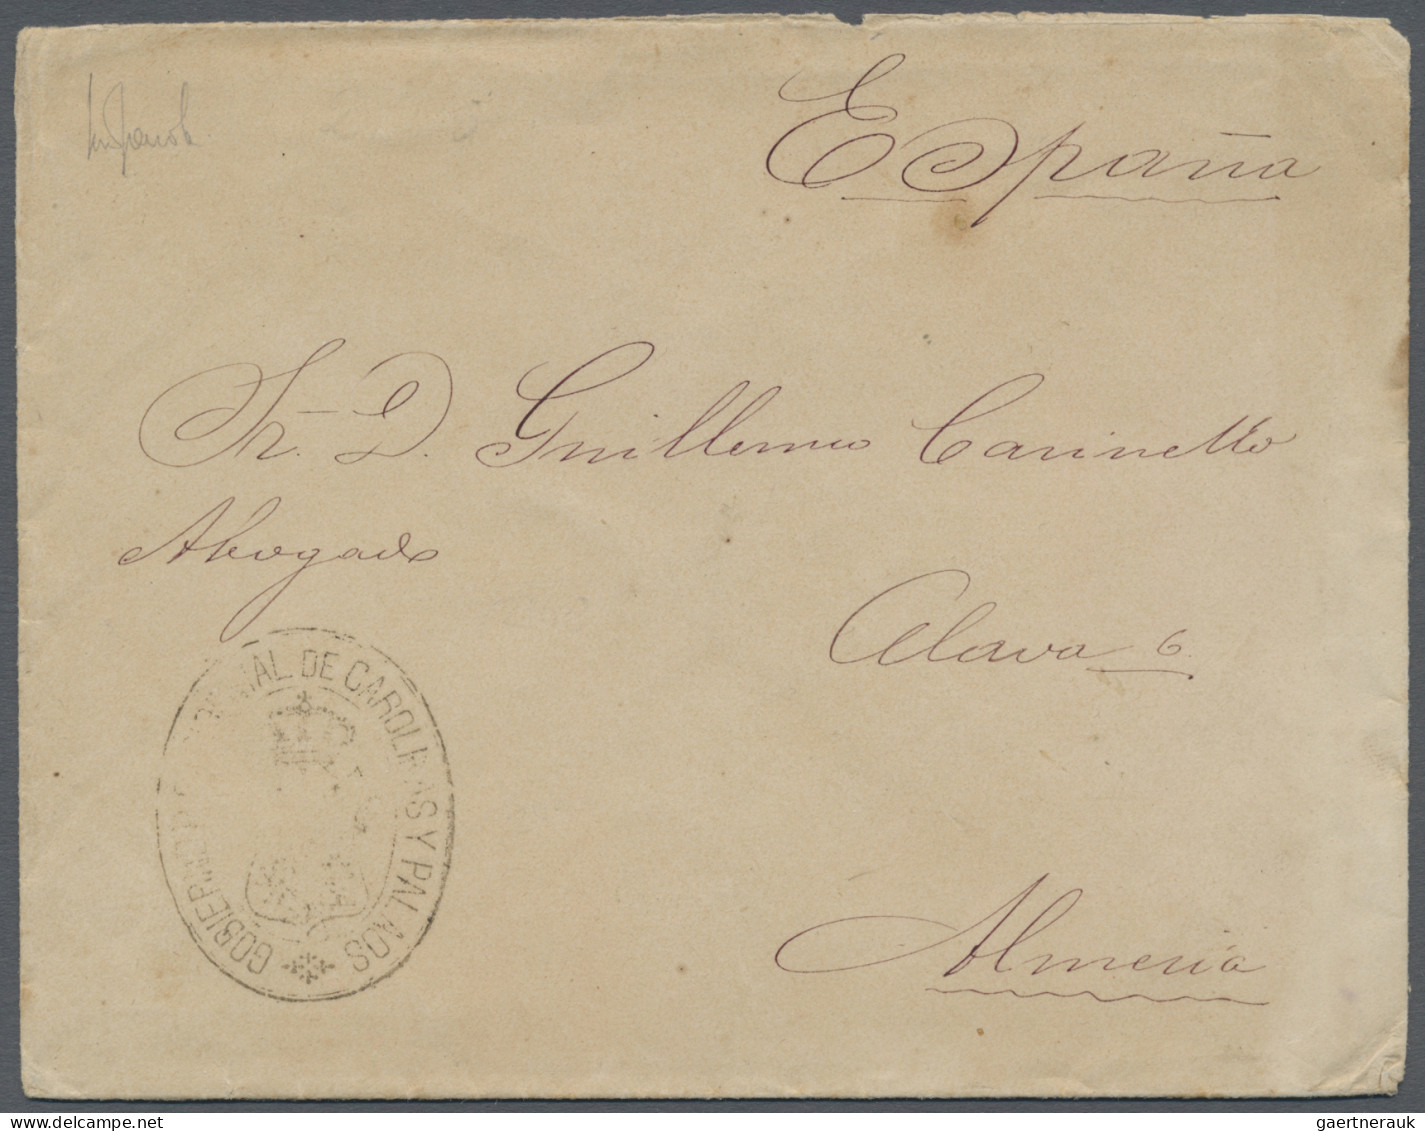 Deutsche Koloninen - Karolinen: PALAU-Inseln: 1898, "GOBIERNO P.OCCIDENTAL DE CA - Caroline Islands